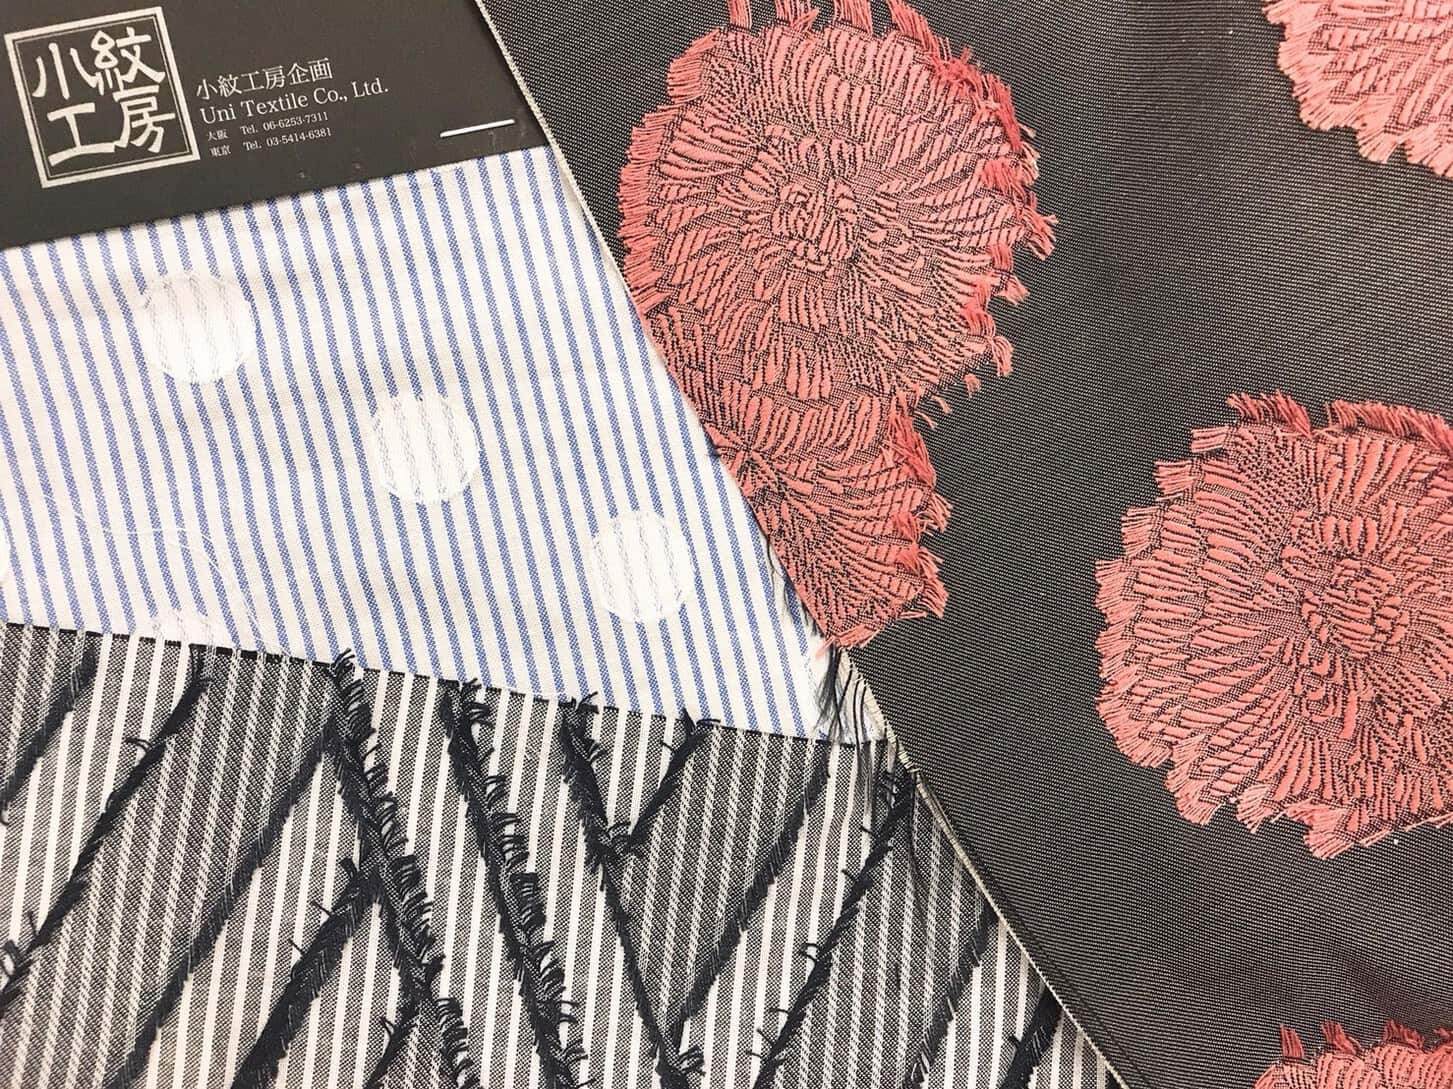 Japanese Fabrics